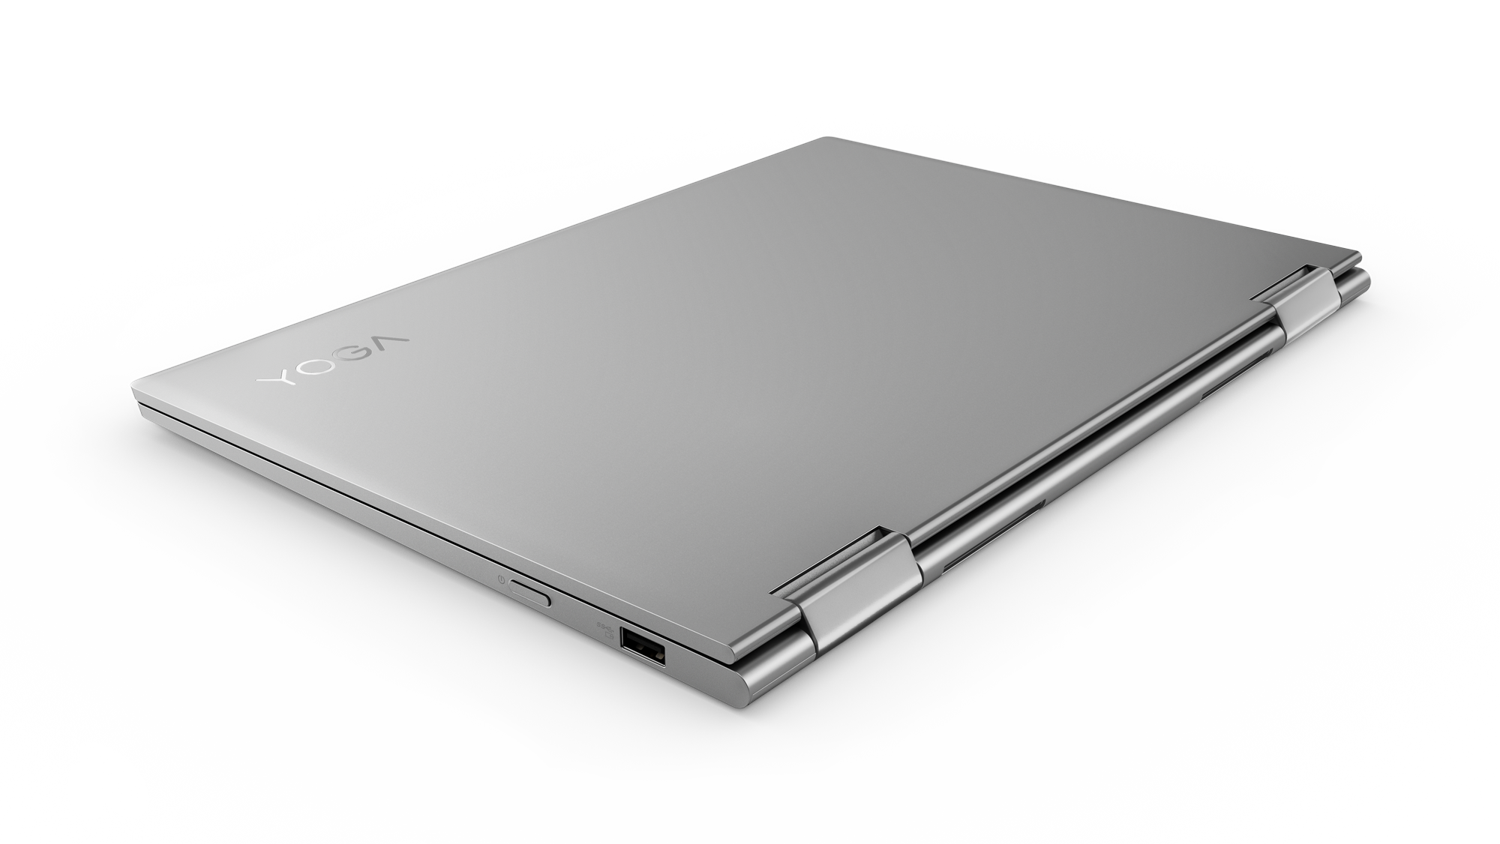 13-inch Lenovo Yoga 730 in Platinum